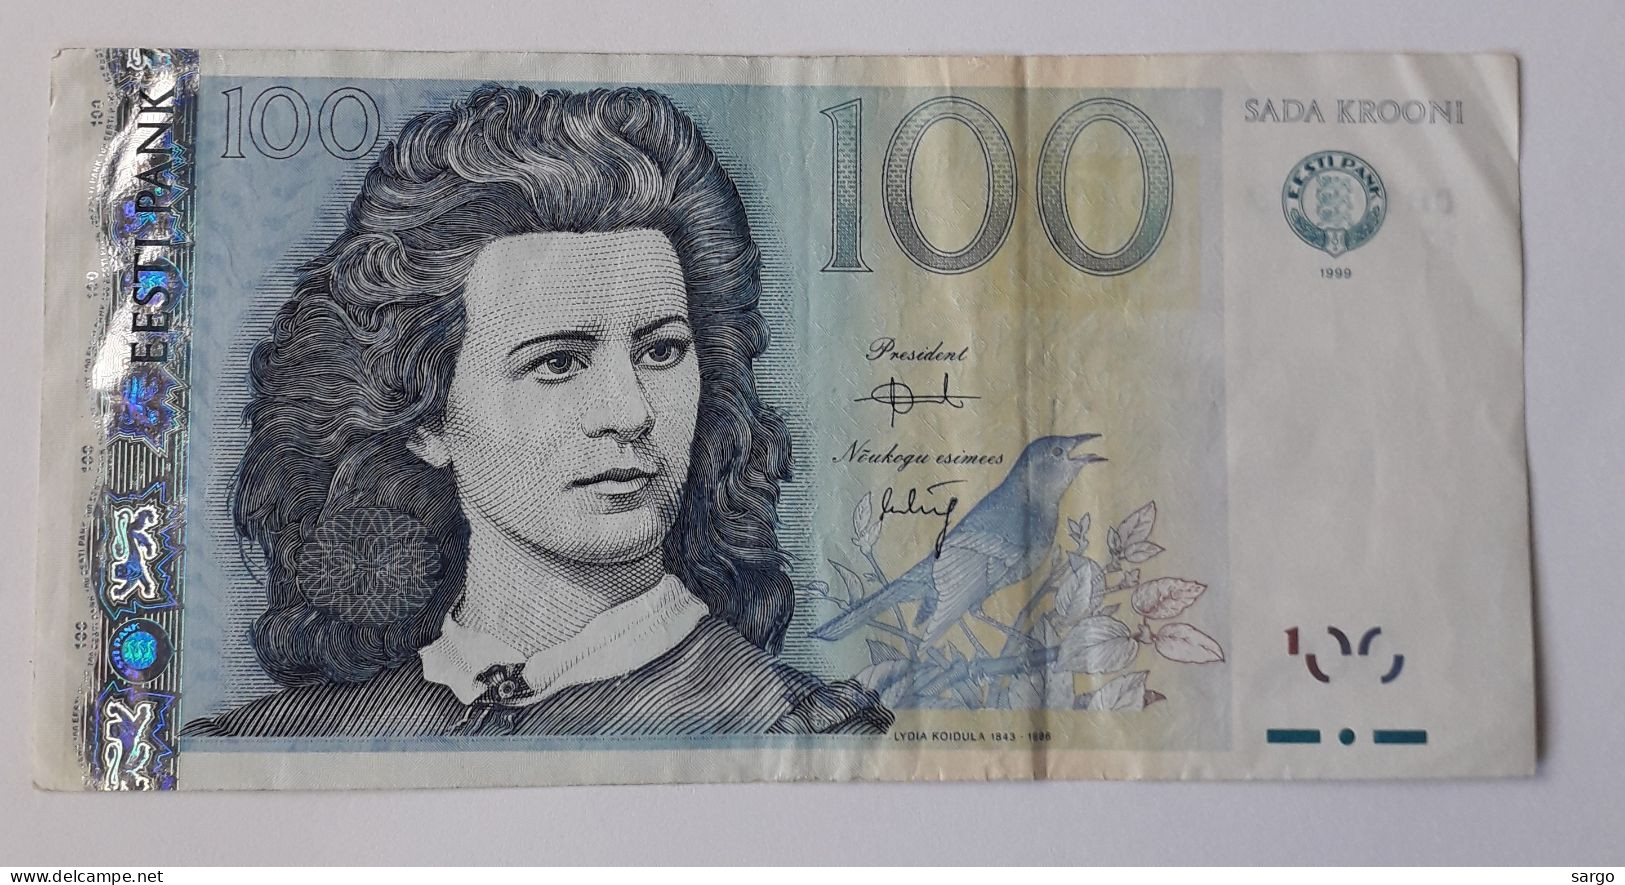 ESTONIA - 100 KROONI -  P 82 - 1999 -  CIRC - BANKNOTES - PAPER MONEY - CARTAMONETA - - Estland